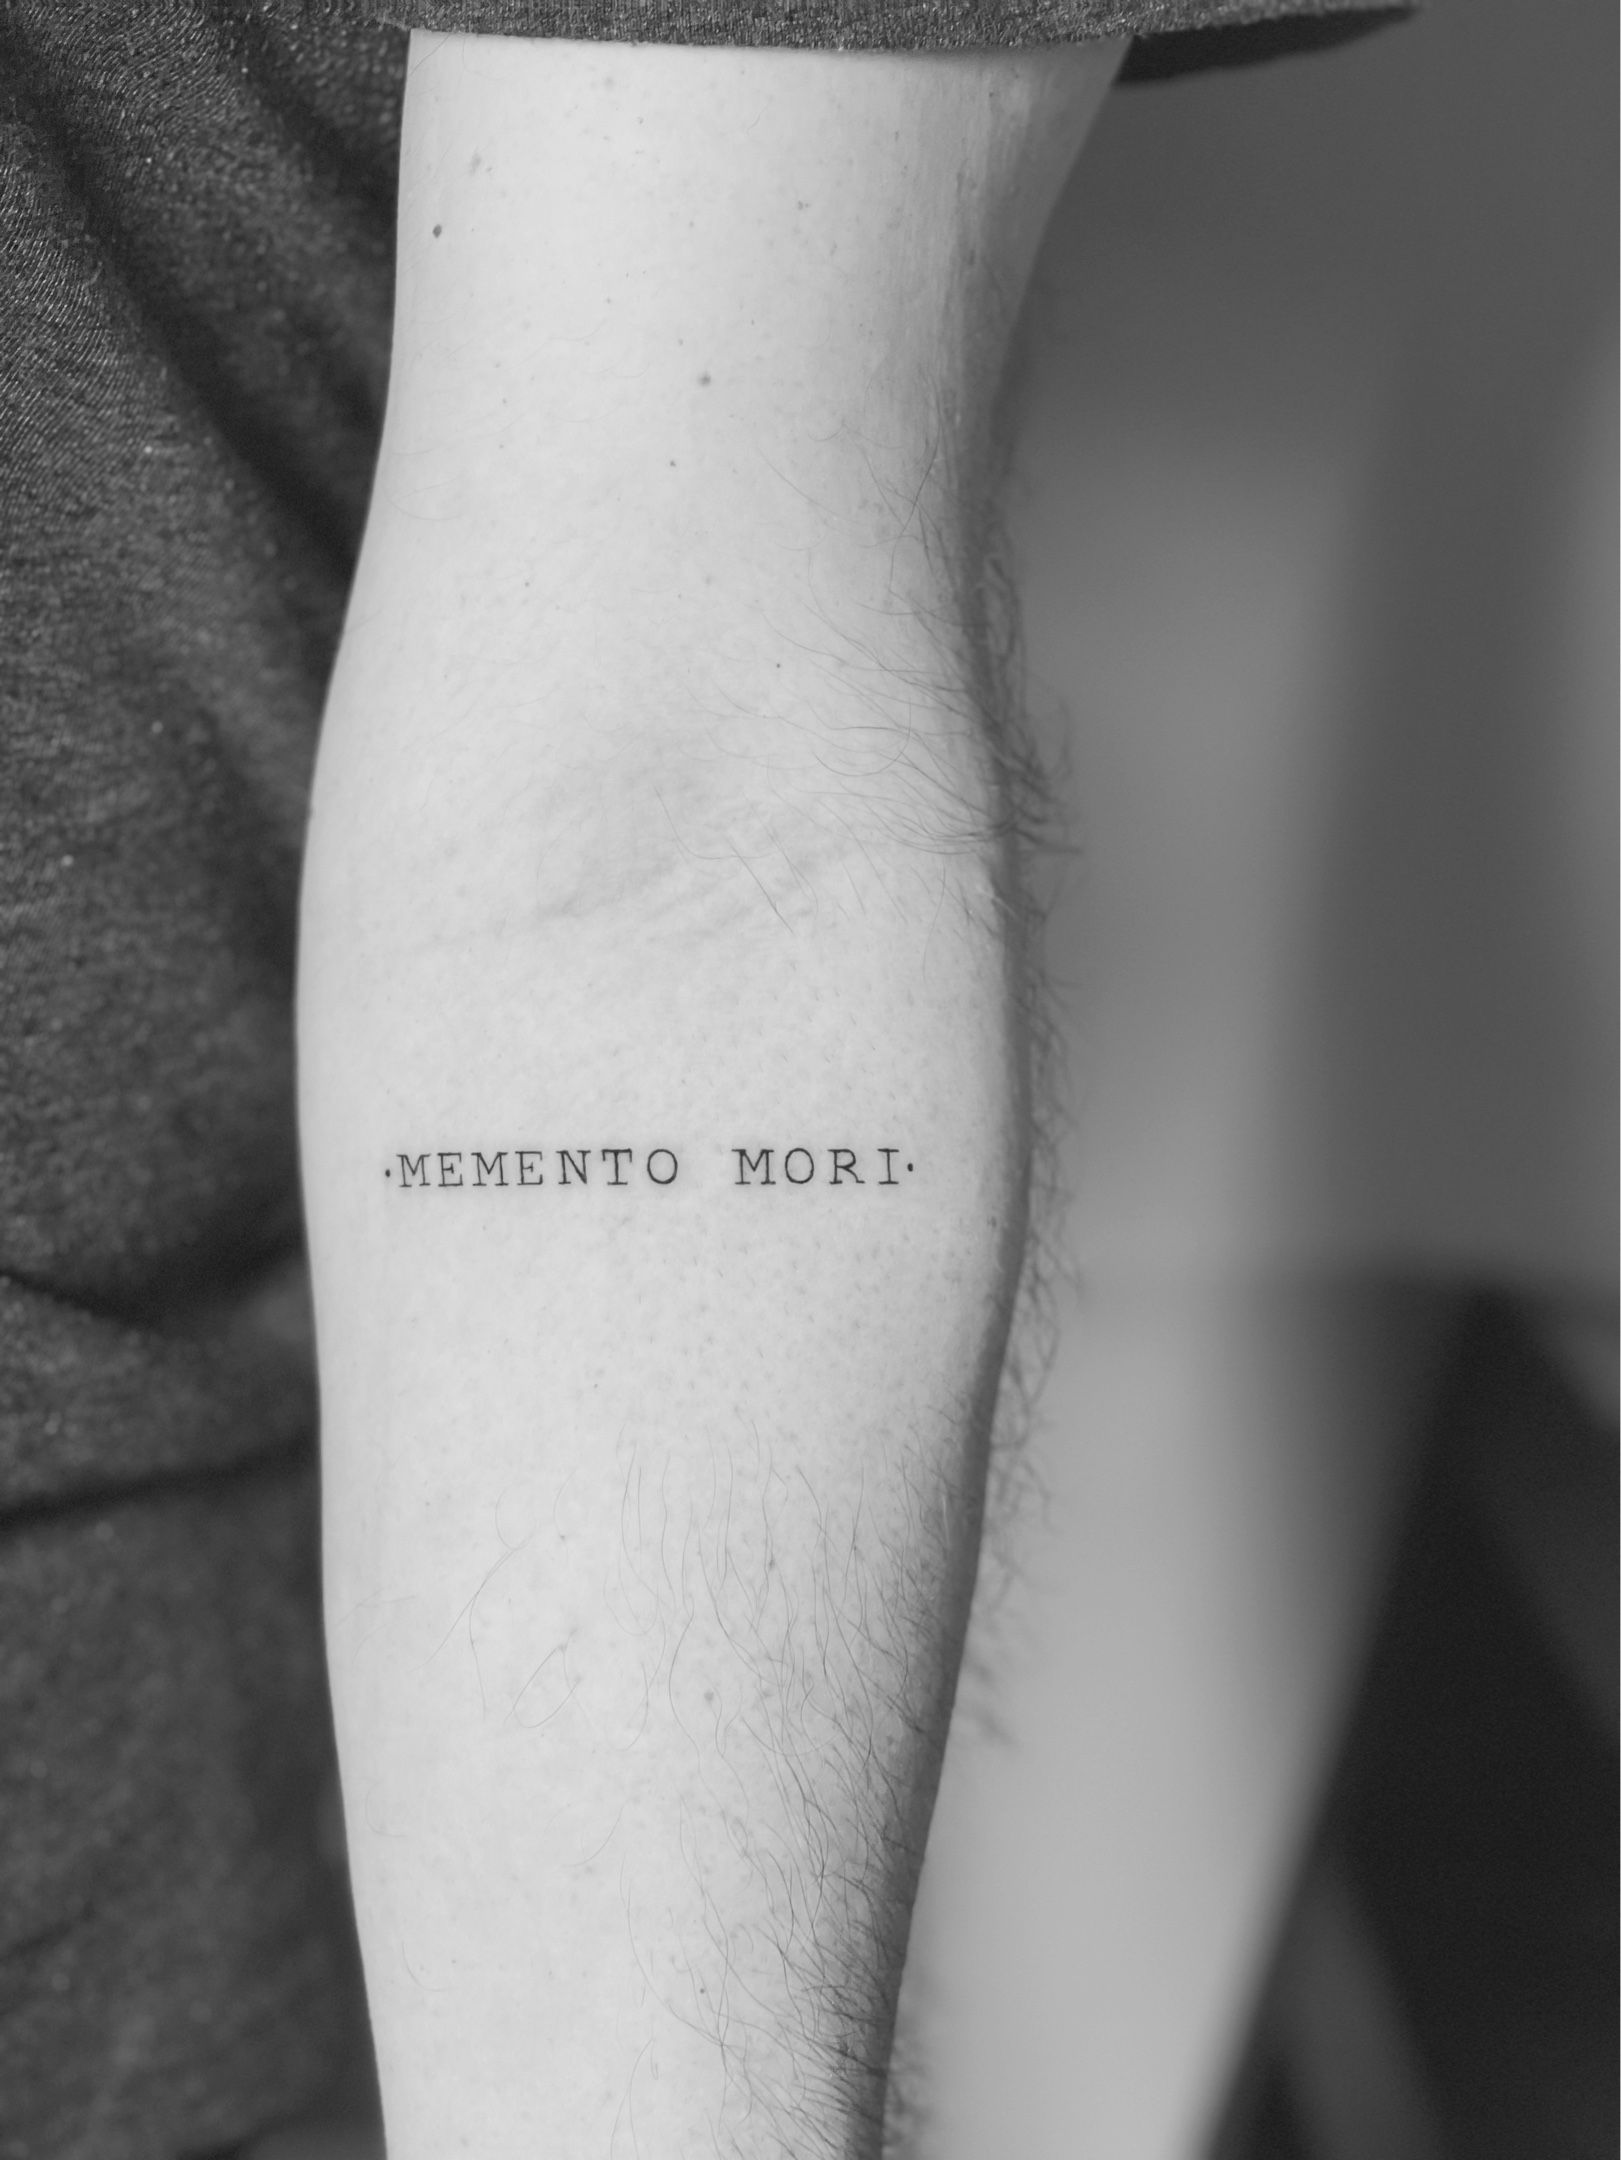 20 Memento Mori Tattoo Ideas for Men and Women  Moms Got the Stuff